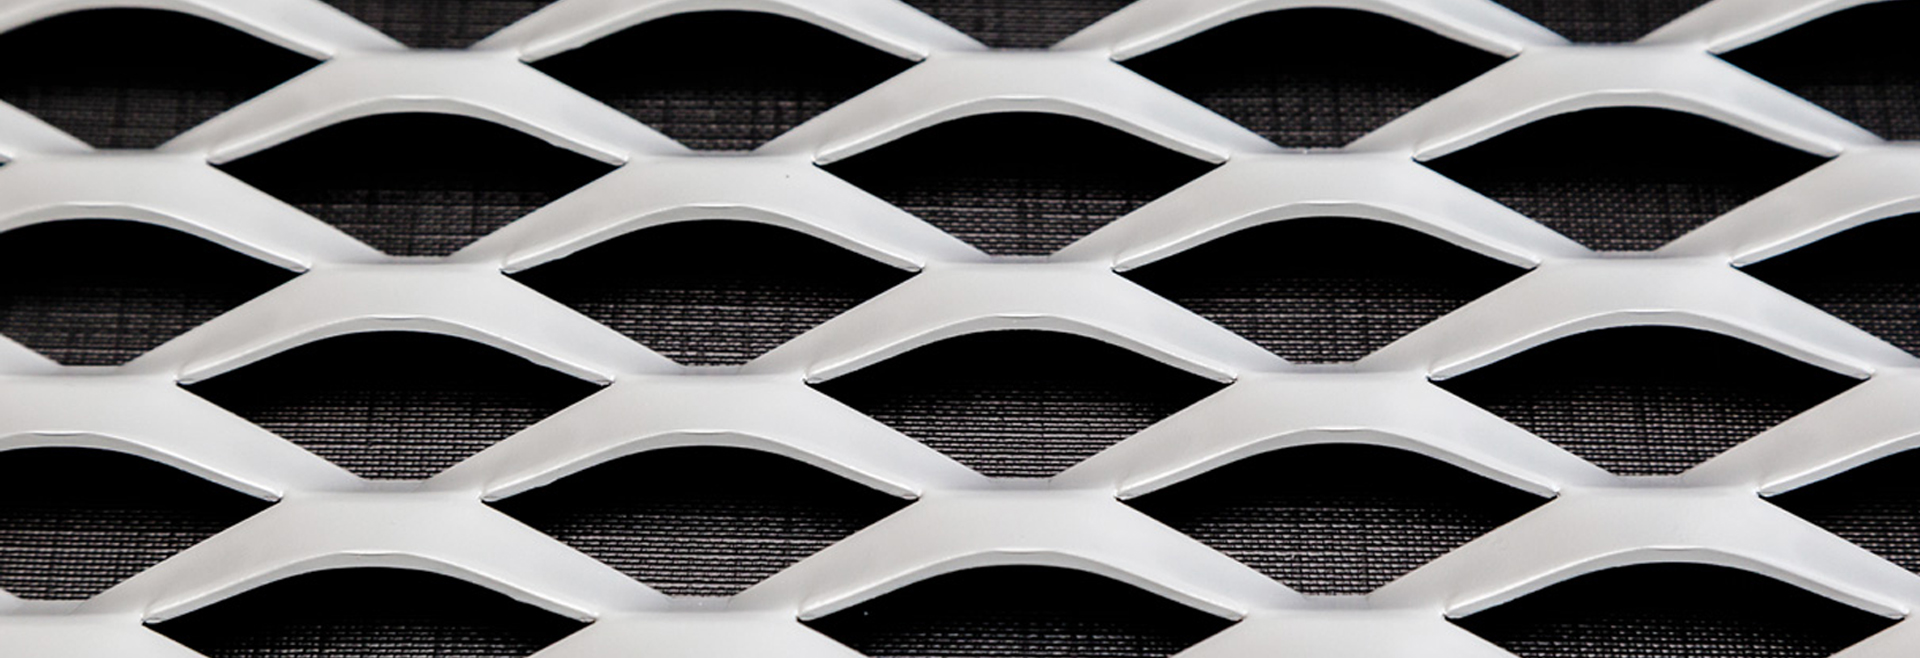 Trechter webspin Baars Praktisch Architectural Metal Wire Mesh, Panels, Screen and Sheets | Junen  Manufacturer